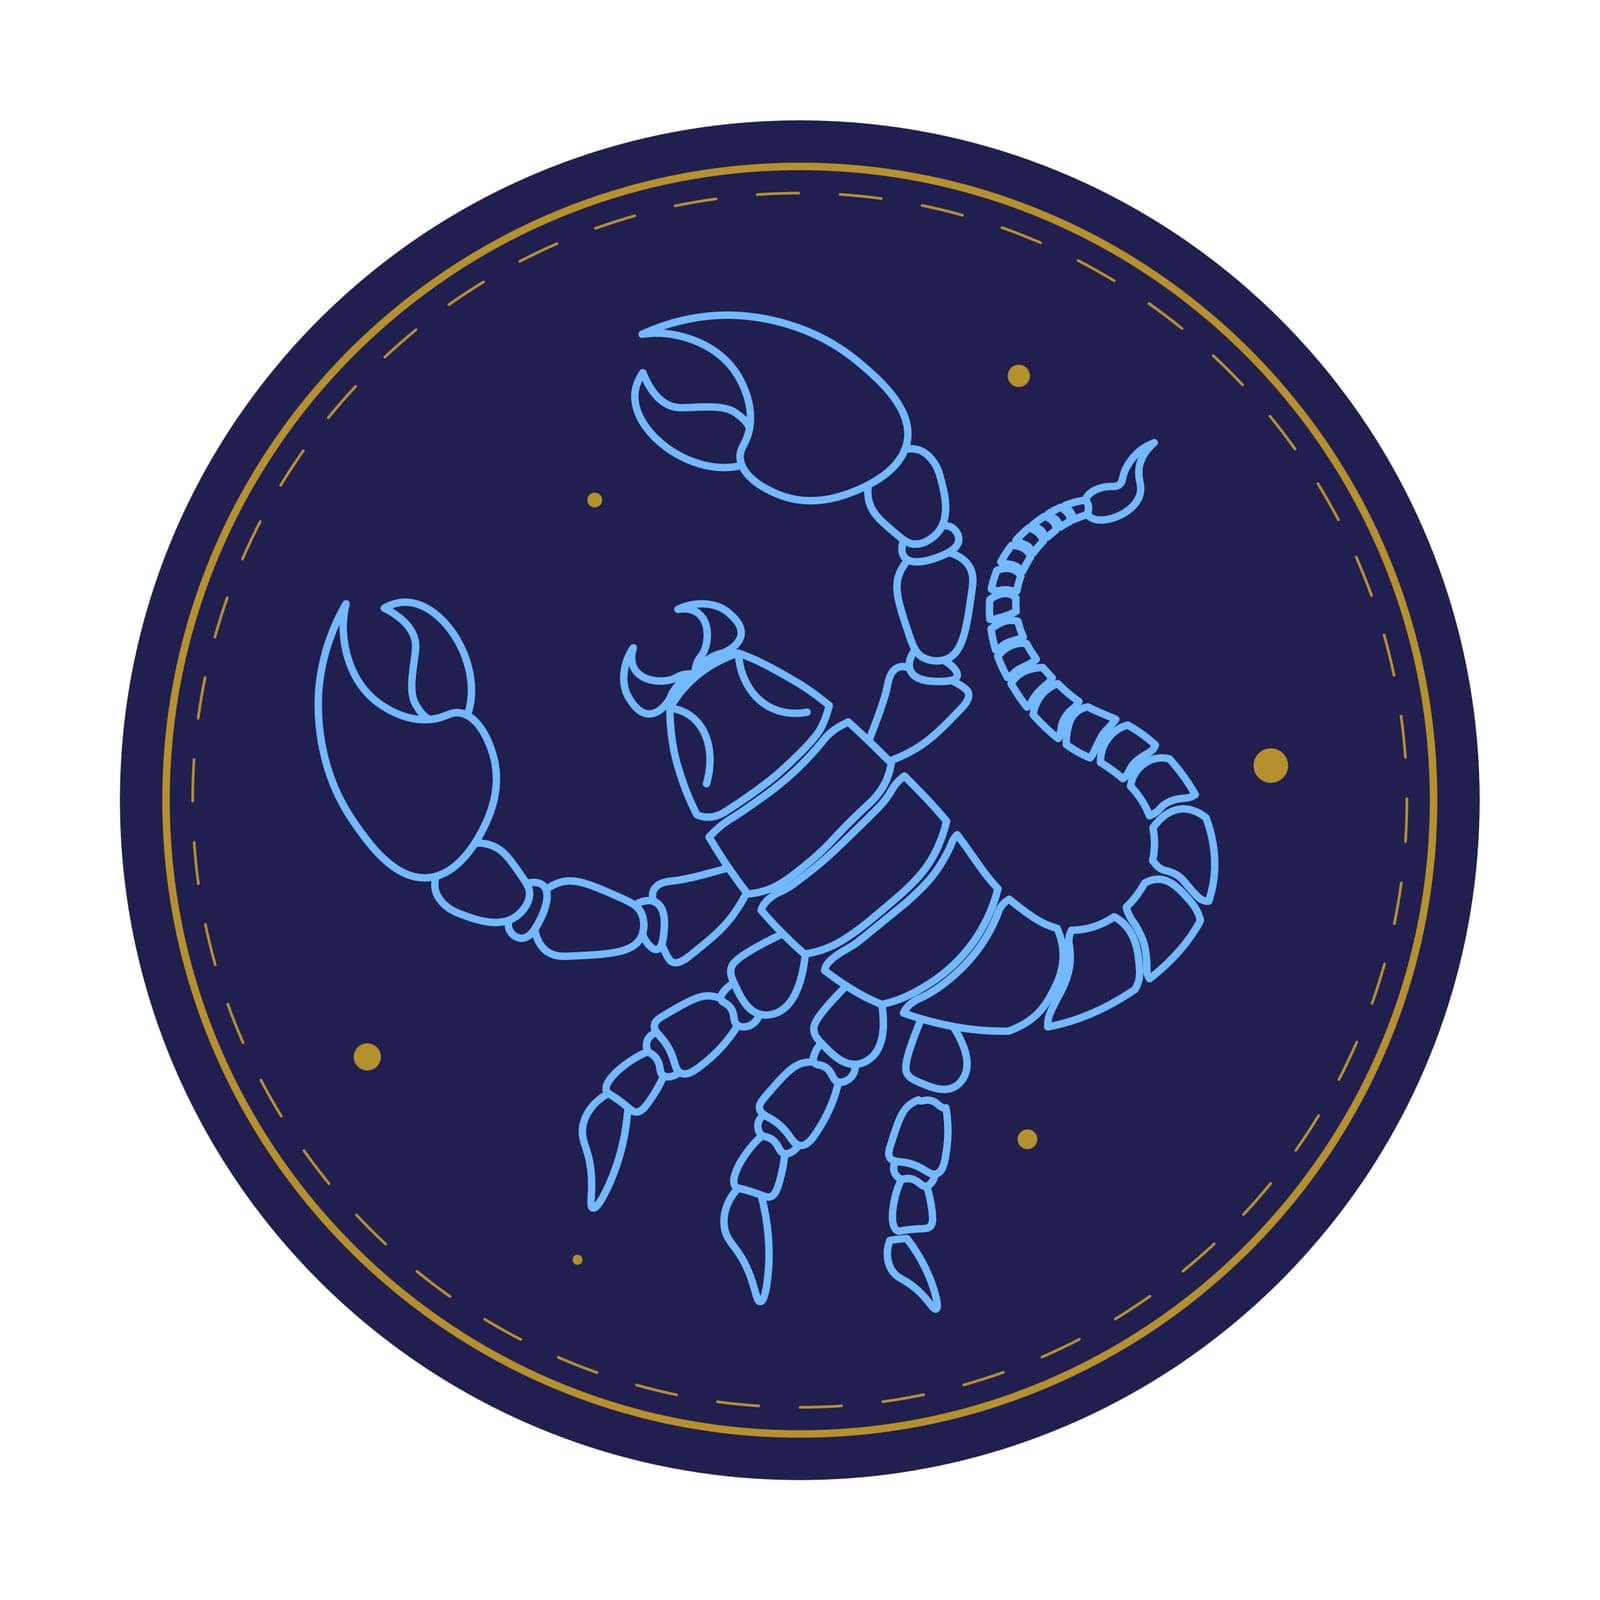 Scorpio astrological sign, horoscope symbol vector by Sonulkaster